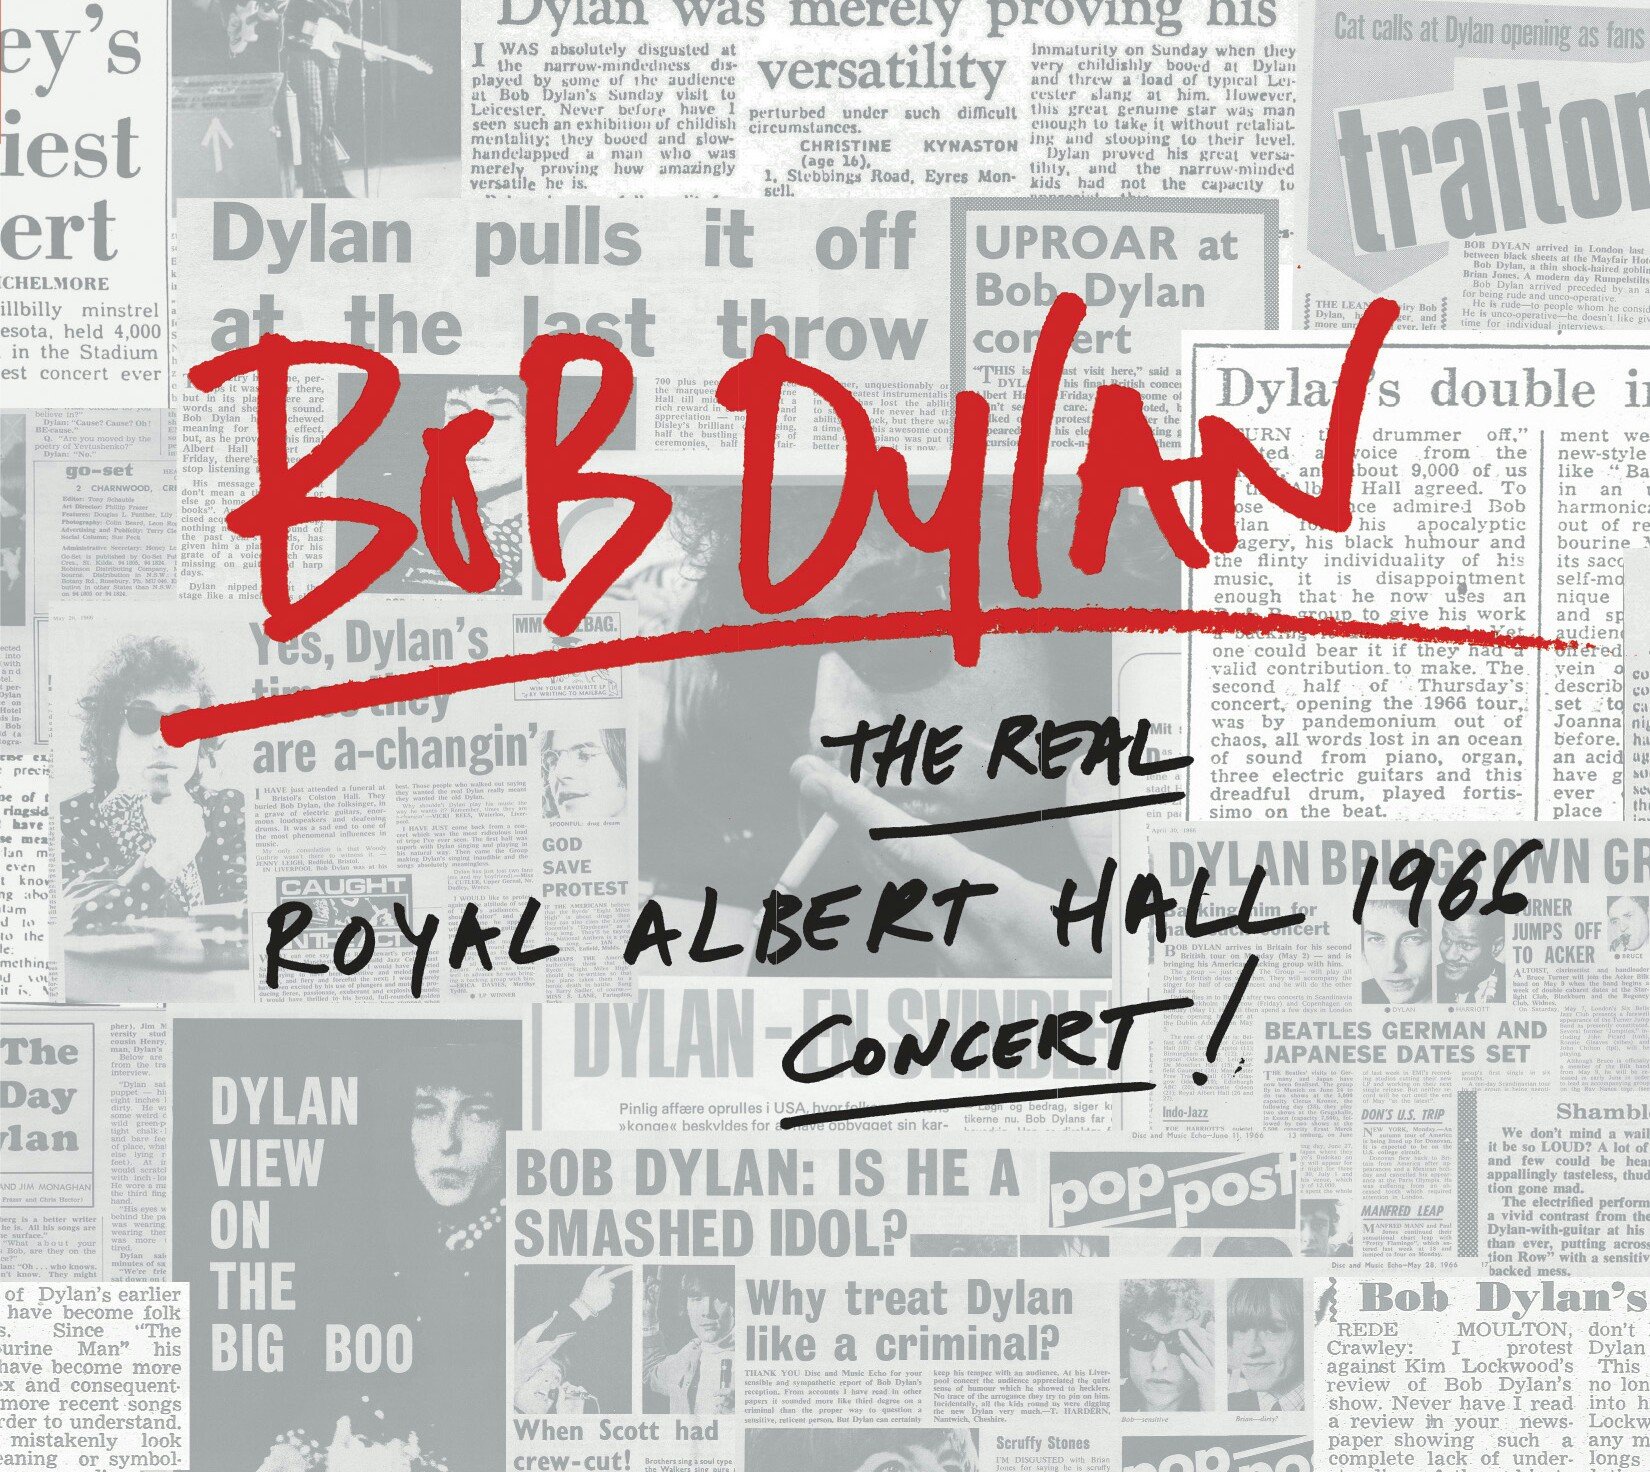 Bob Dylan - The Real Royal Albert Hall 1966 Concert (2016) 24bit FLAC Download